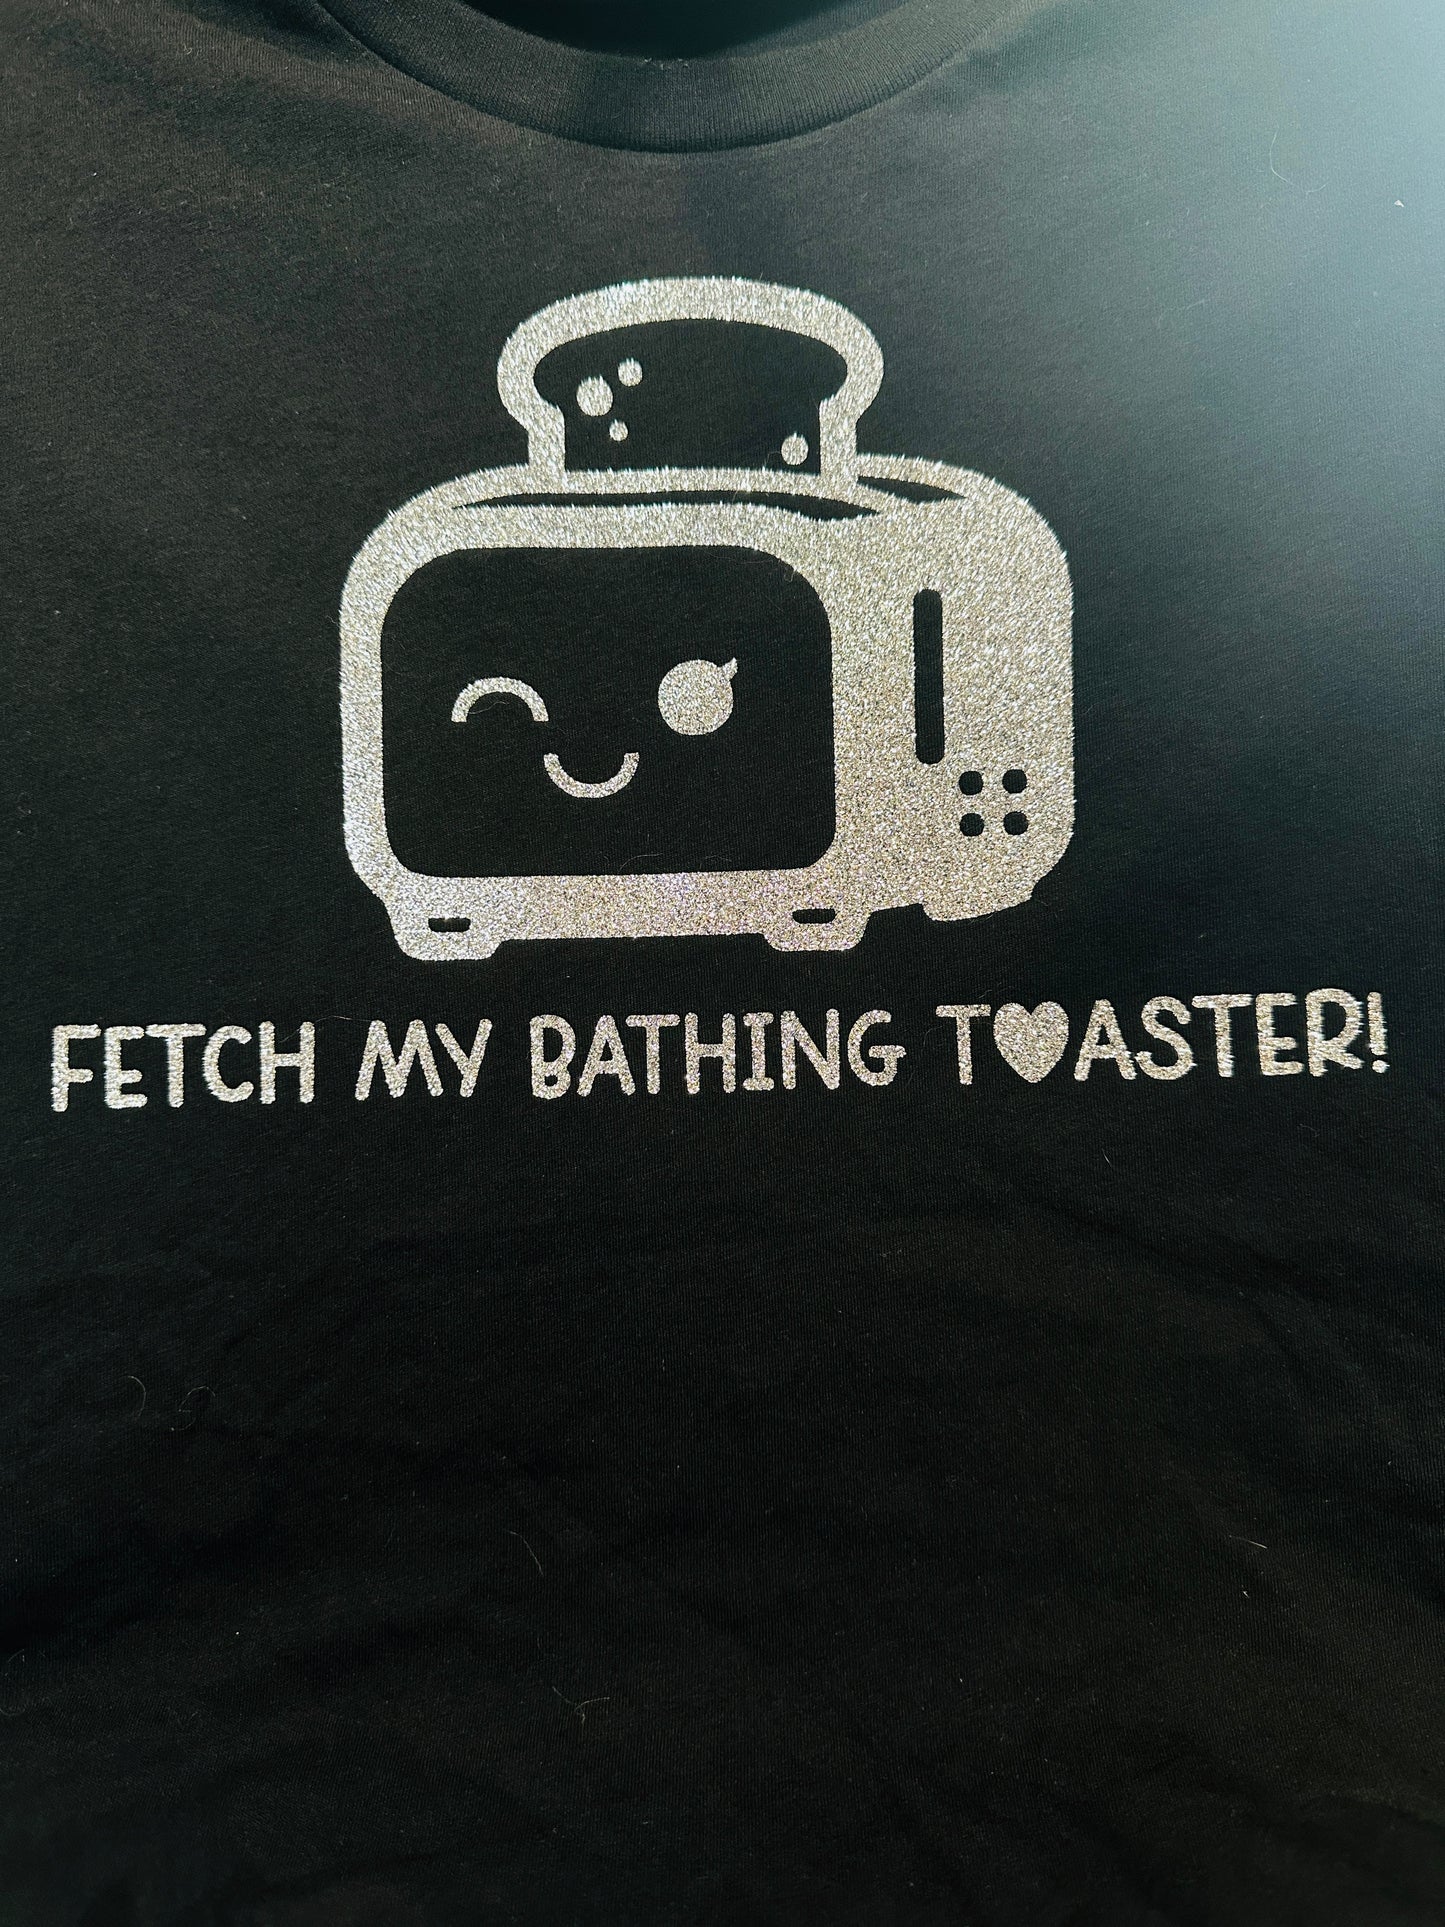 Fetch My Bathing Toaster